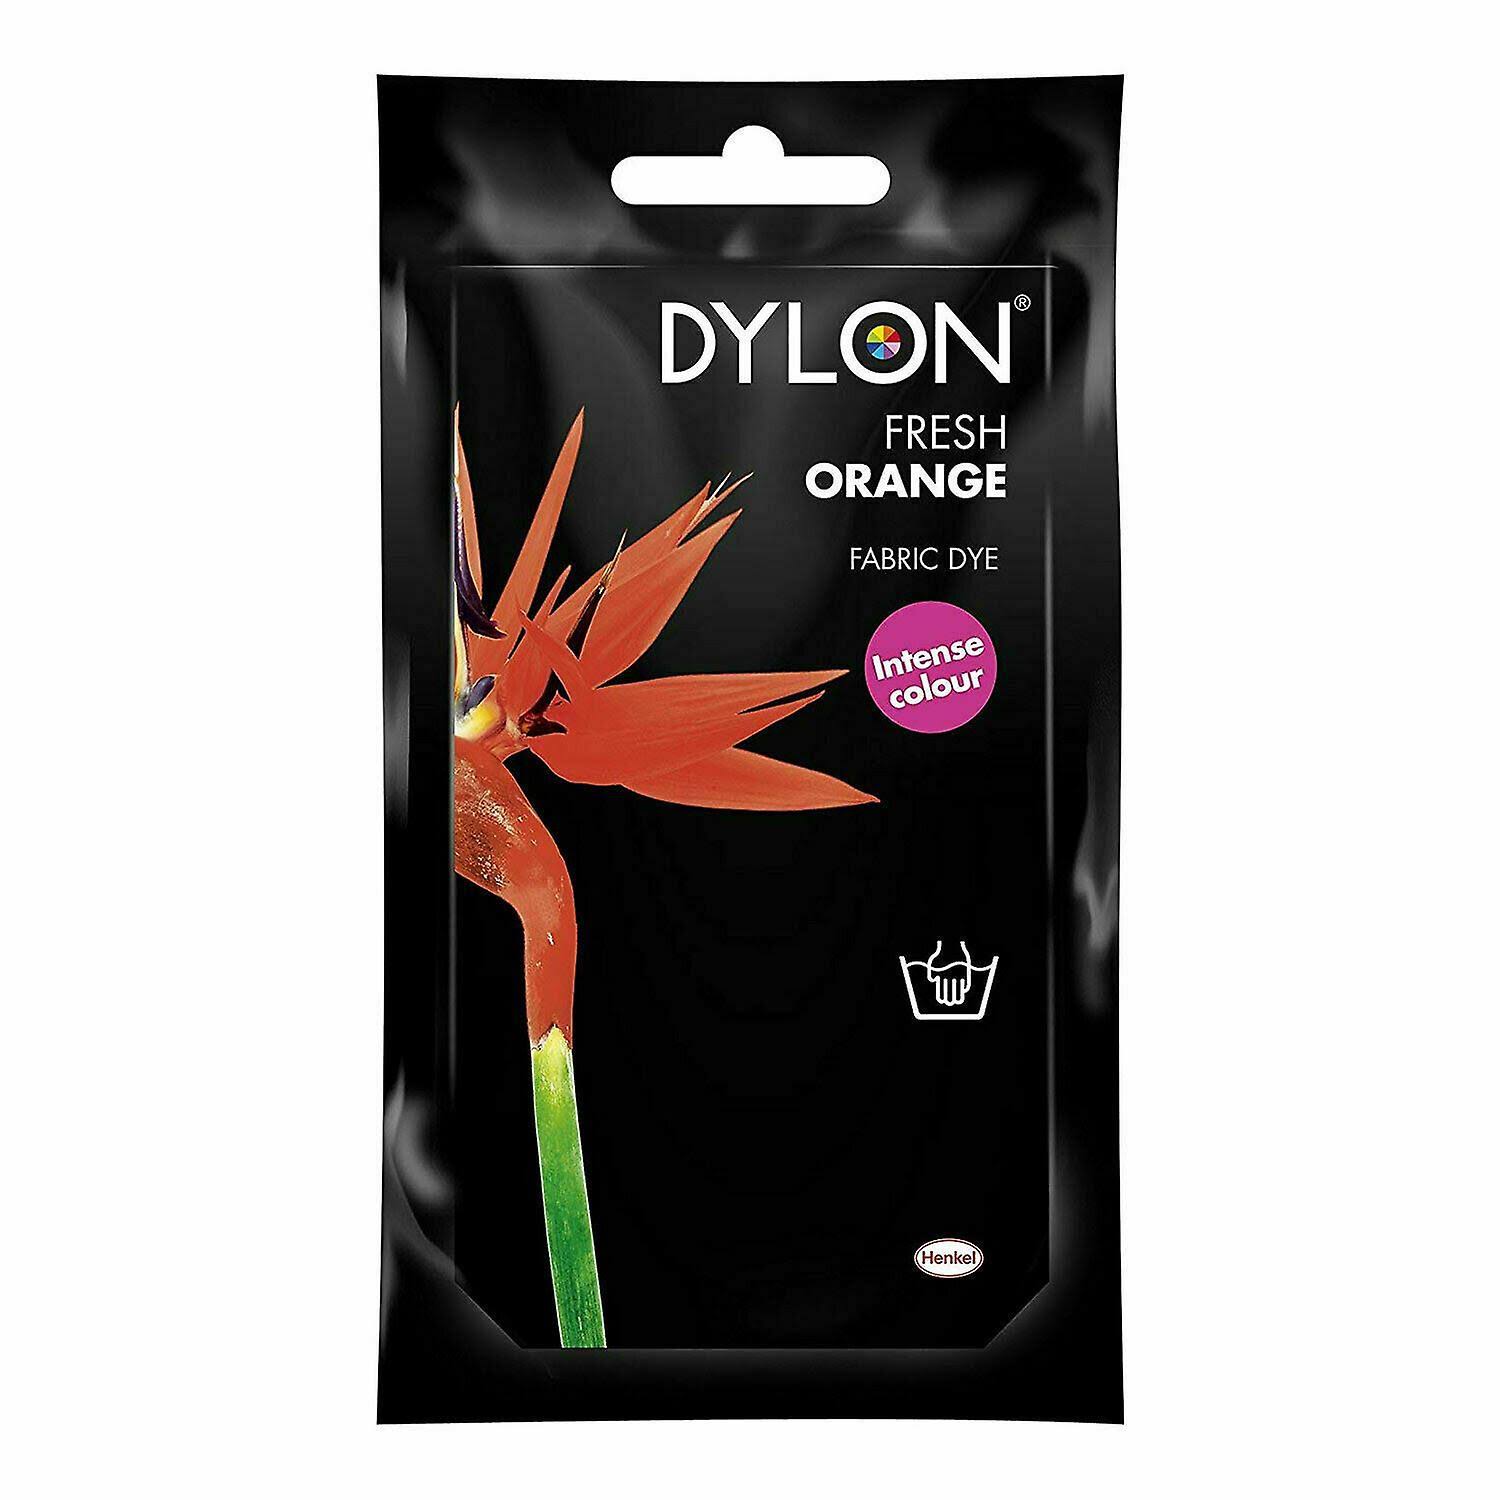 Dylon Hand Dye Fabric Dye - Goldfish Orange